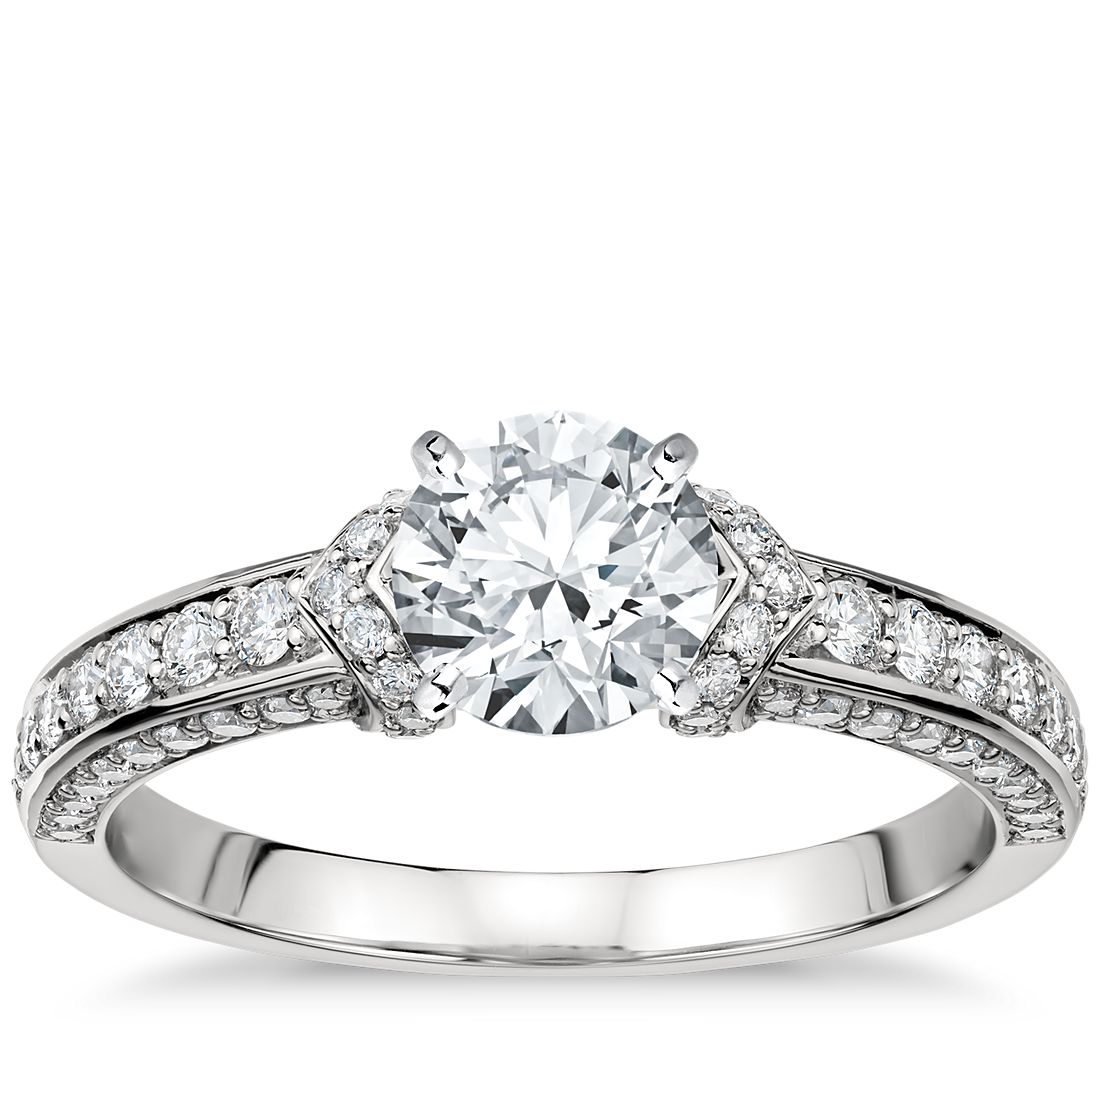 Blue Nile Studio Imperial Micropavé Diamond Engagement Ring in Platinum ...